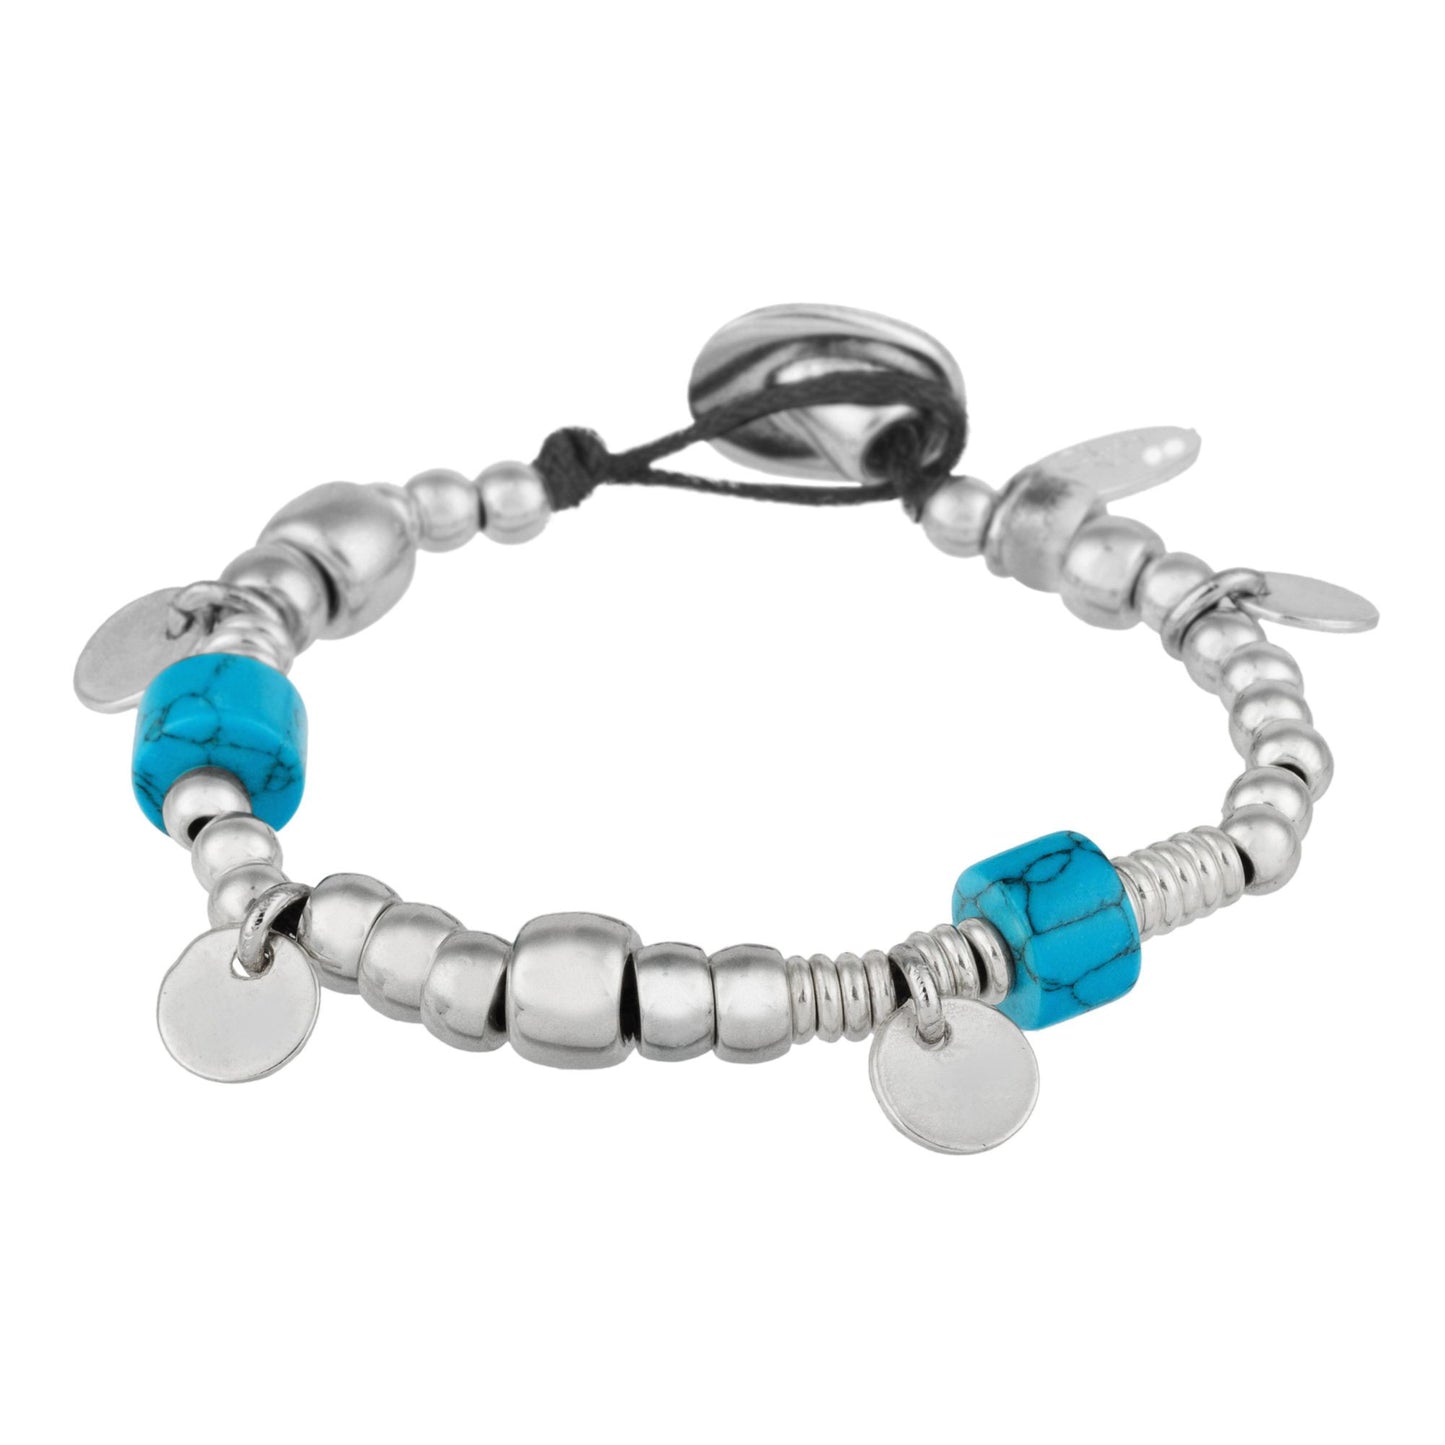 Turquoise silver multibead bracelet